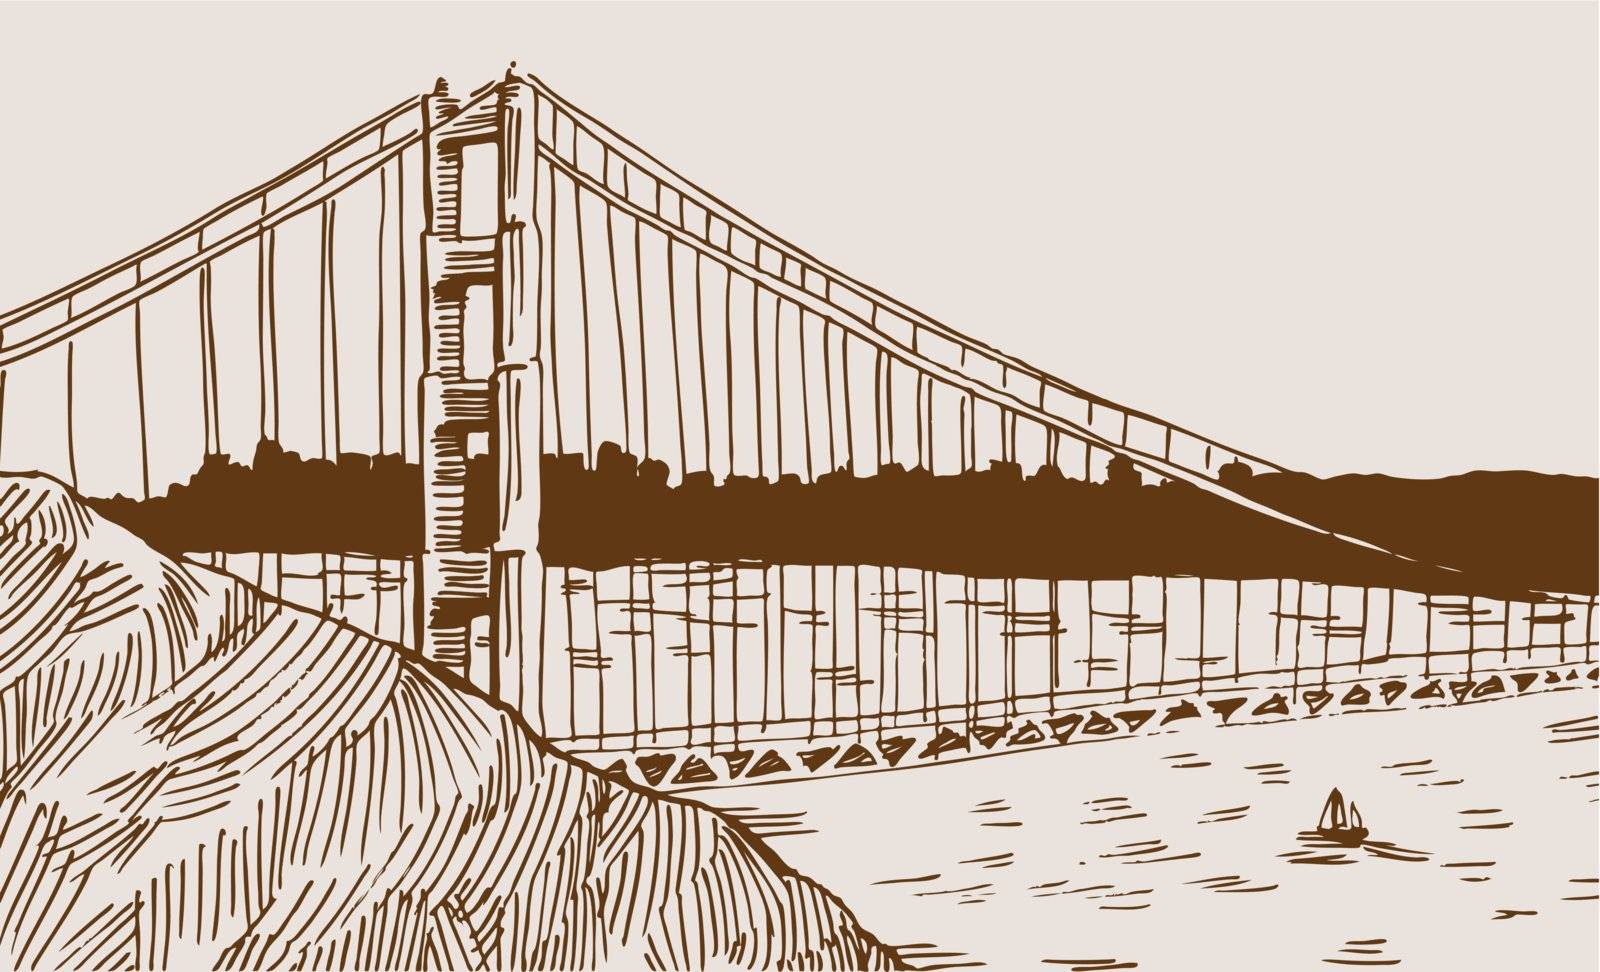 An image of the Golden Gate Bridge.